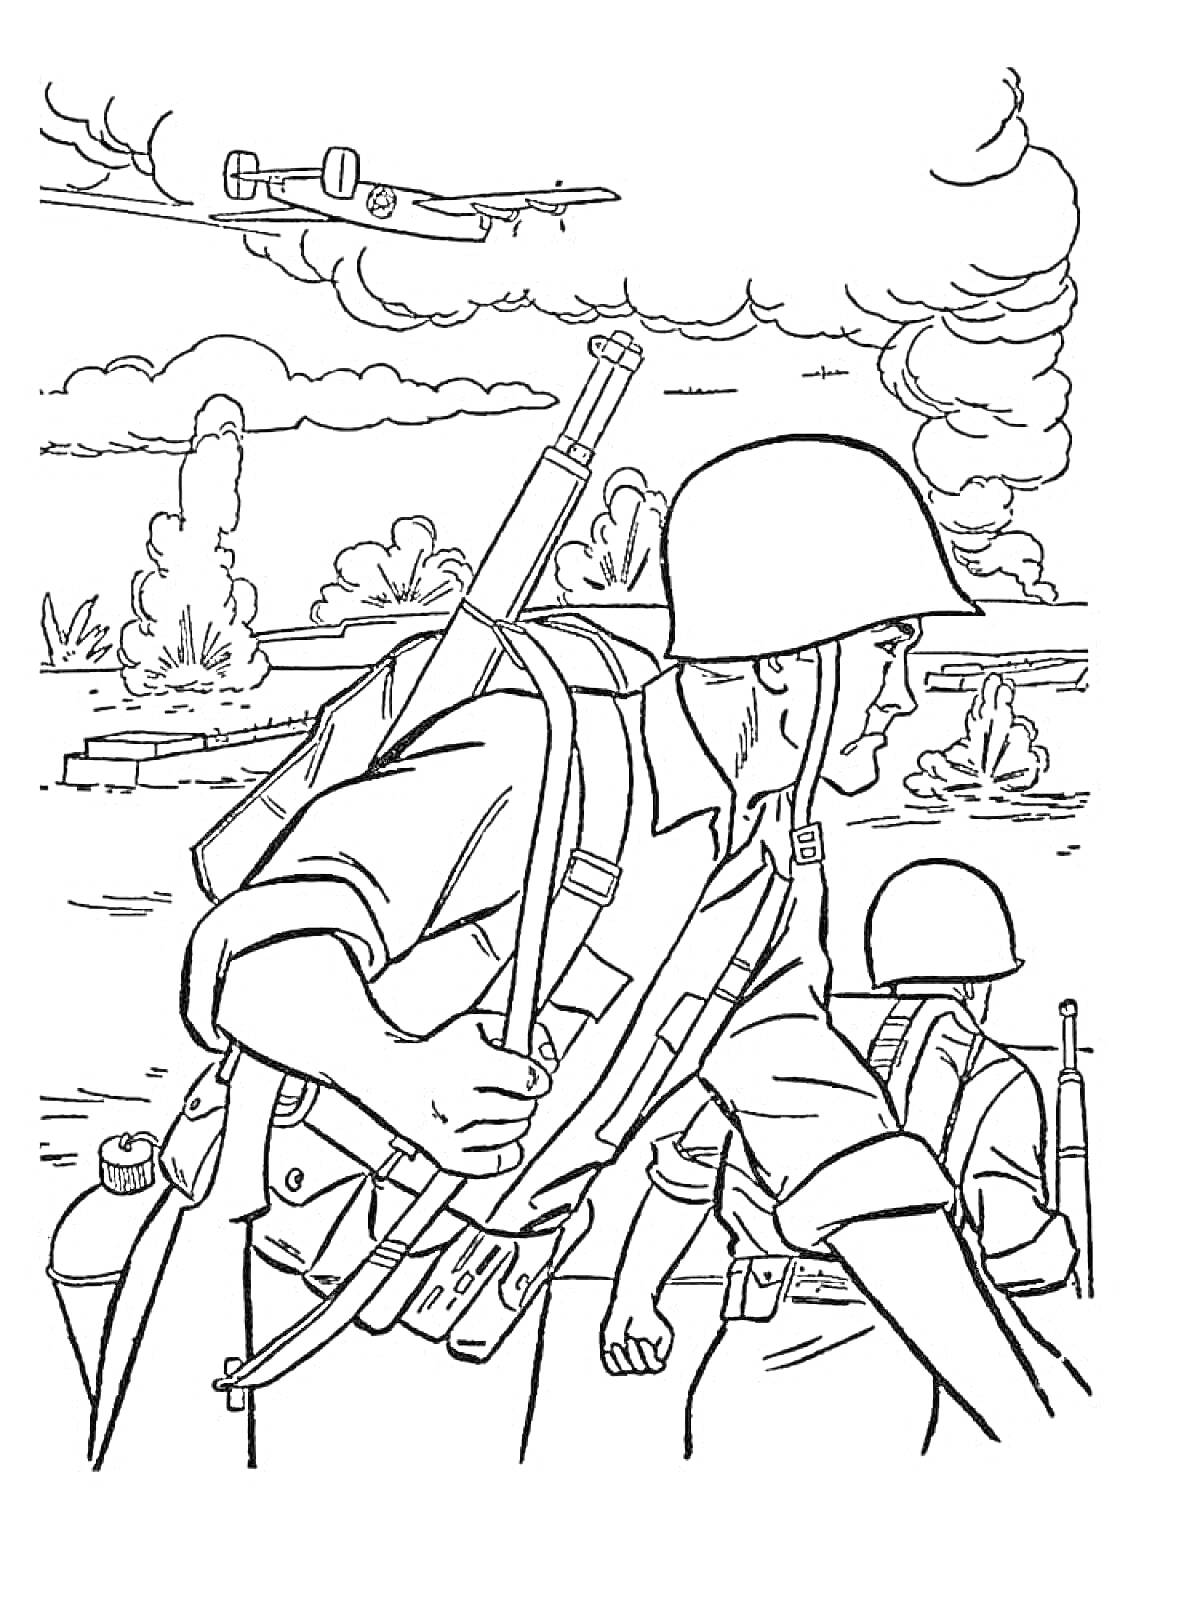 Раскраска Солдаты на фронте с автоматами и рюкзаками, самолёт в небе